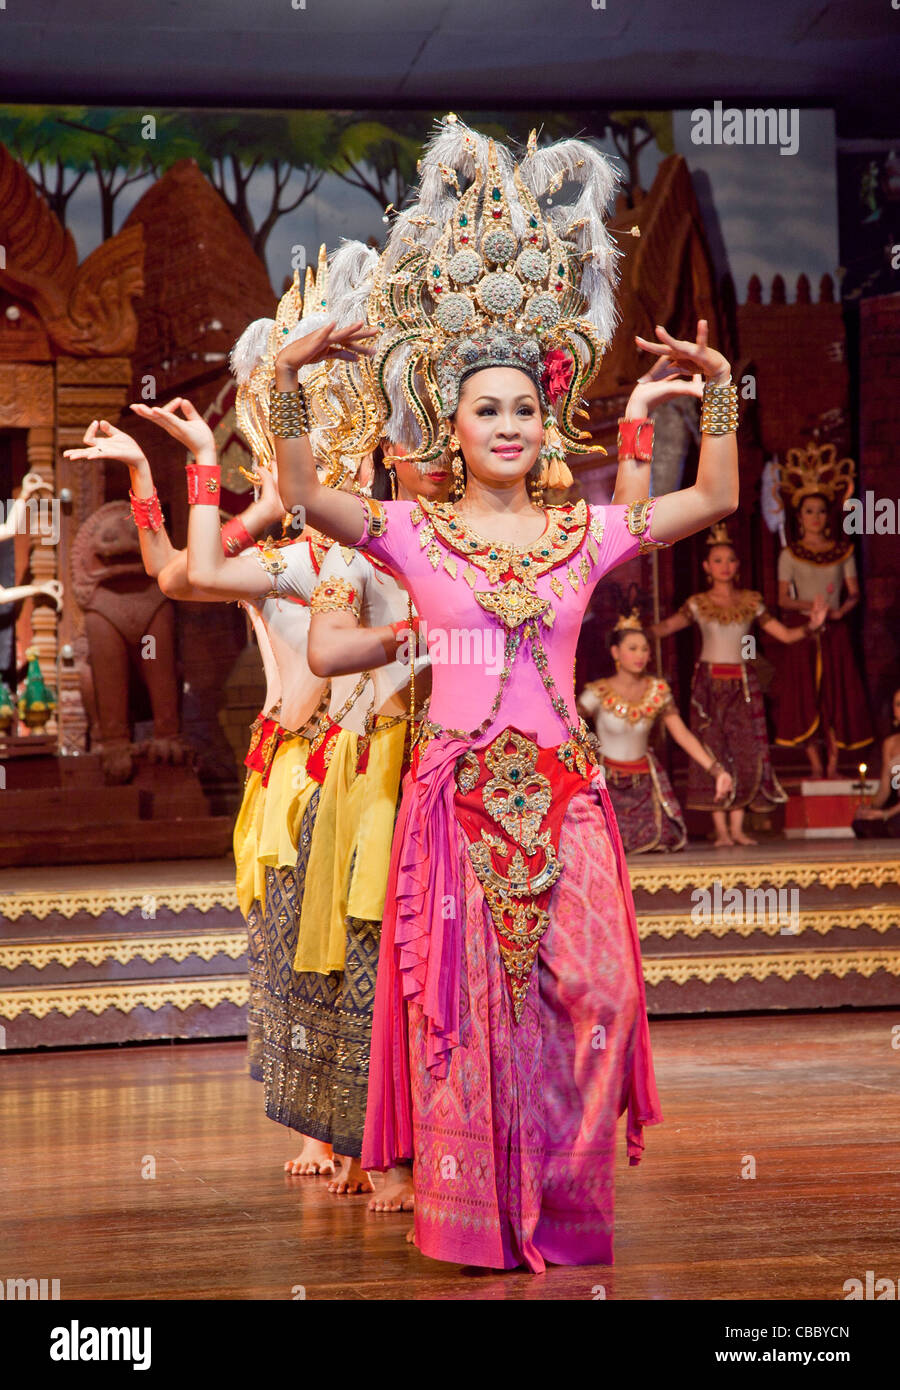 Thailand or Thai Ladyboy Transvestite Culture Dancers Stock Photo